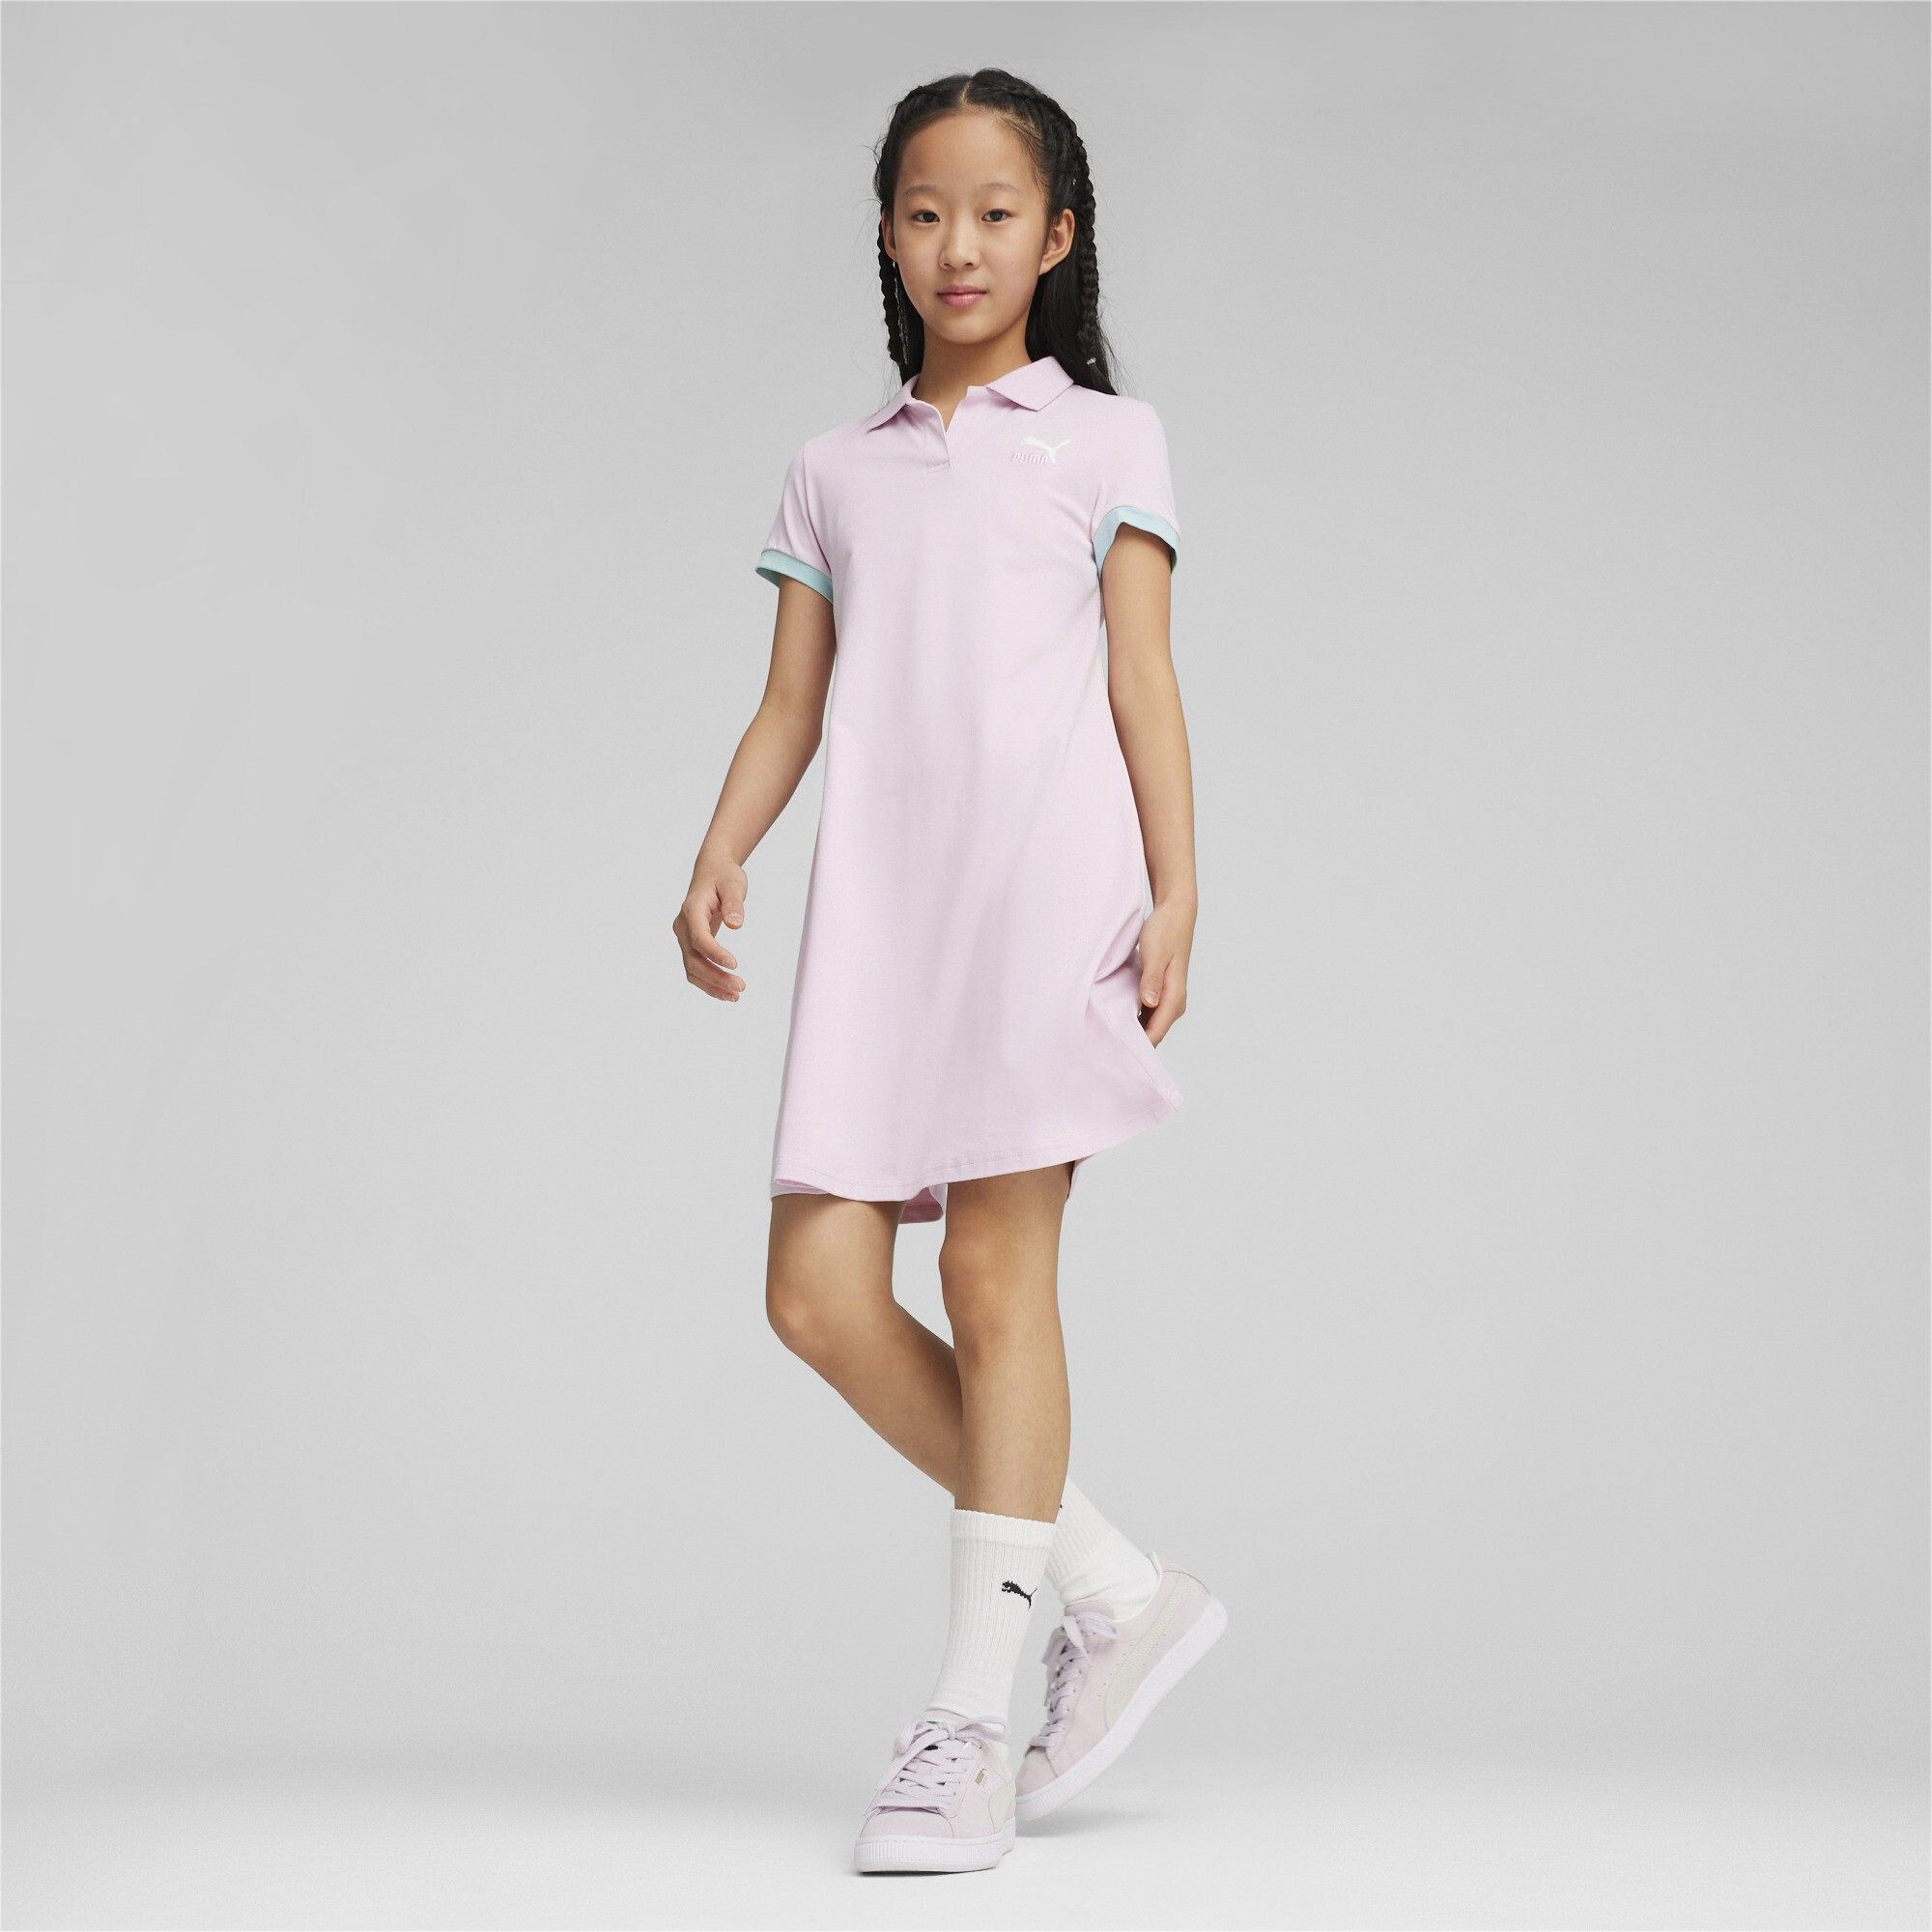 PUMA CLASSICS Match Point Dress In 90 - Purple, Size 7-8 Youth